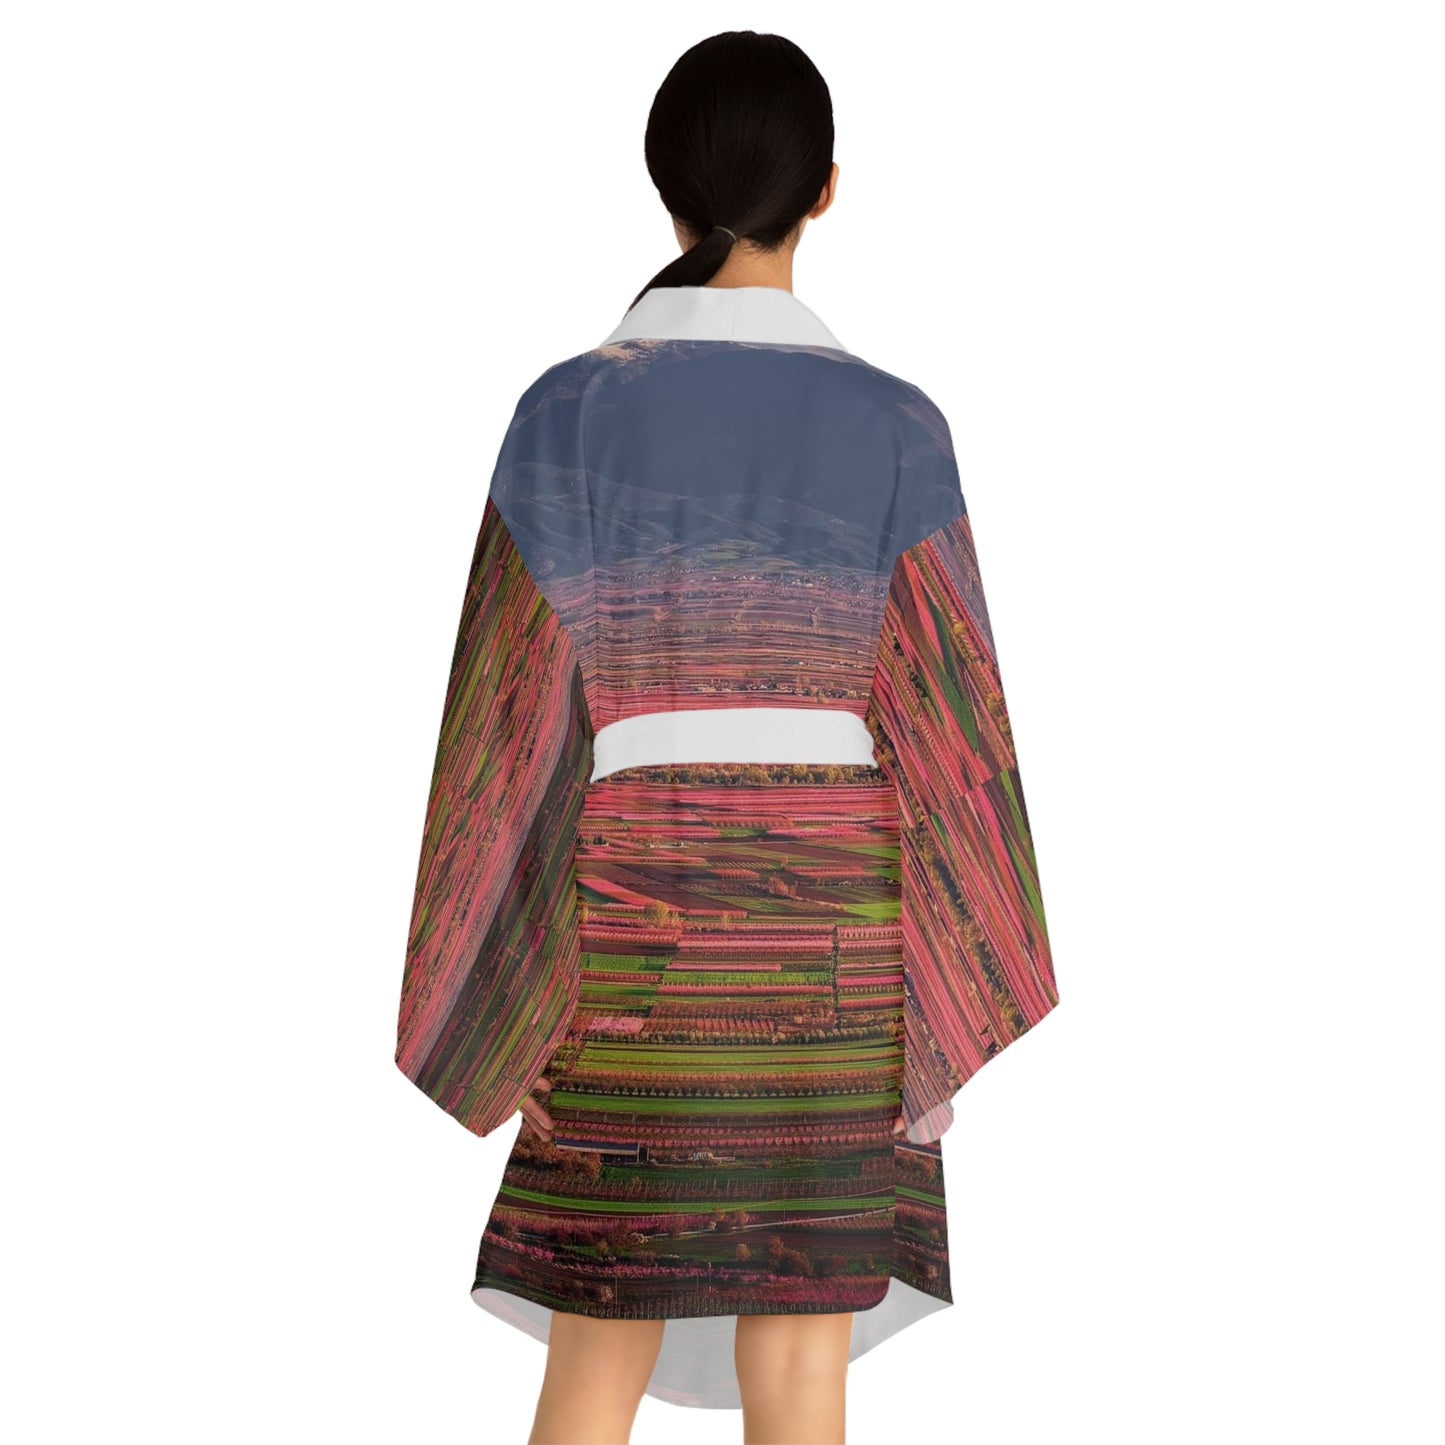 Greek Spring Long Sleeve Kimono Robe (AOP)